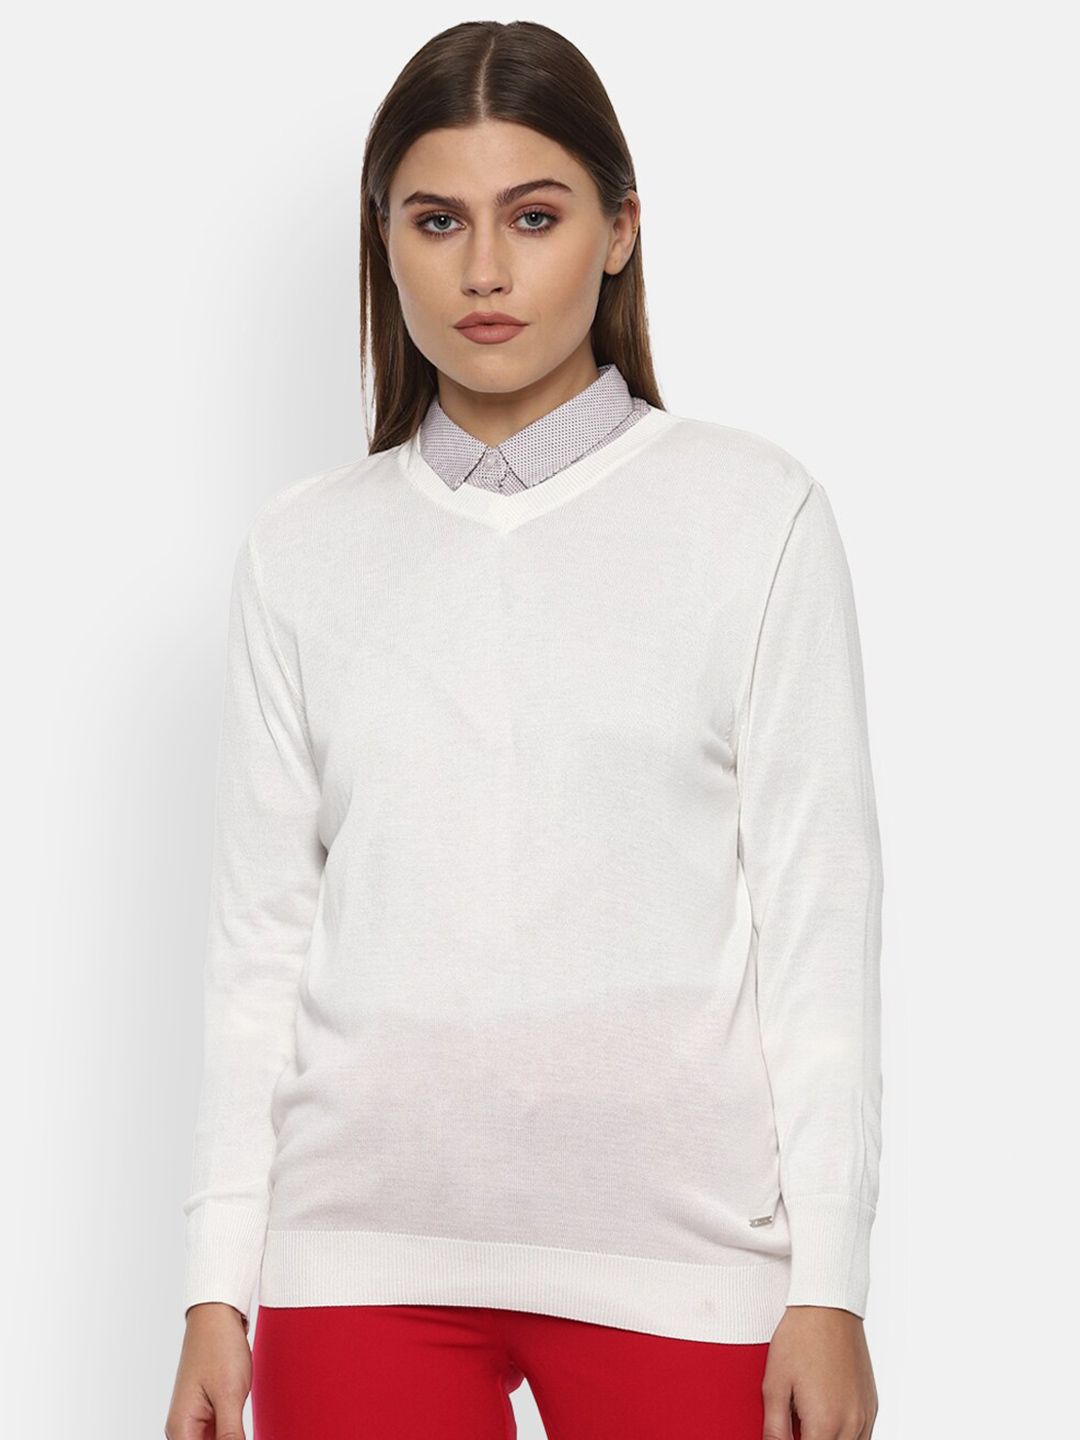 Van Heusen Woman Women White Solid V-Neck Sweater Price in India